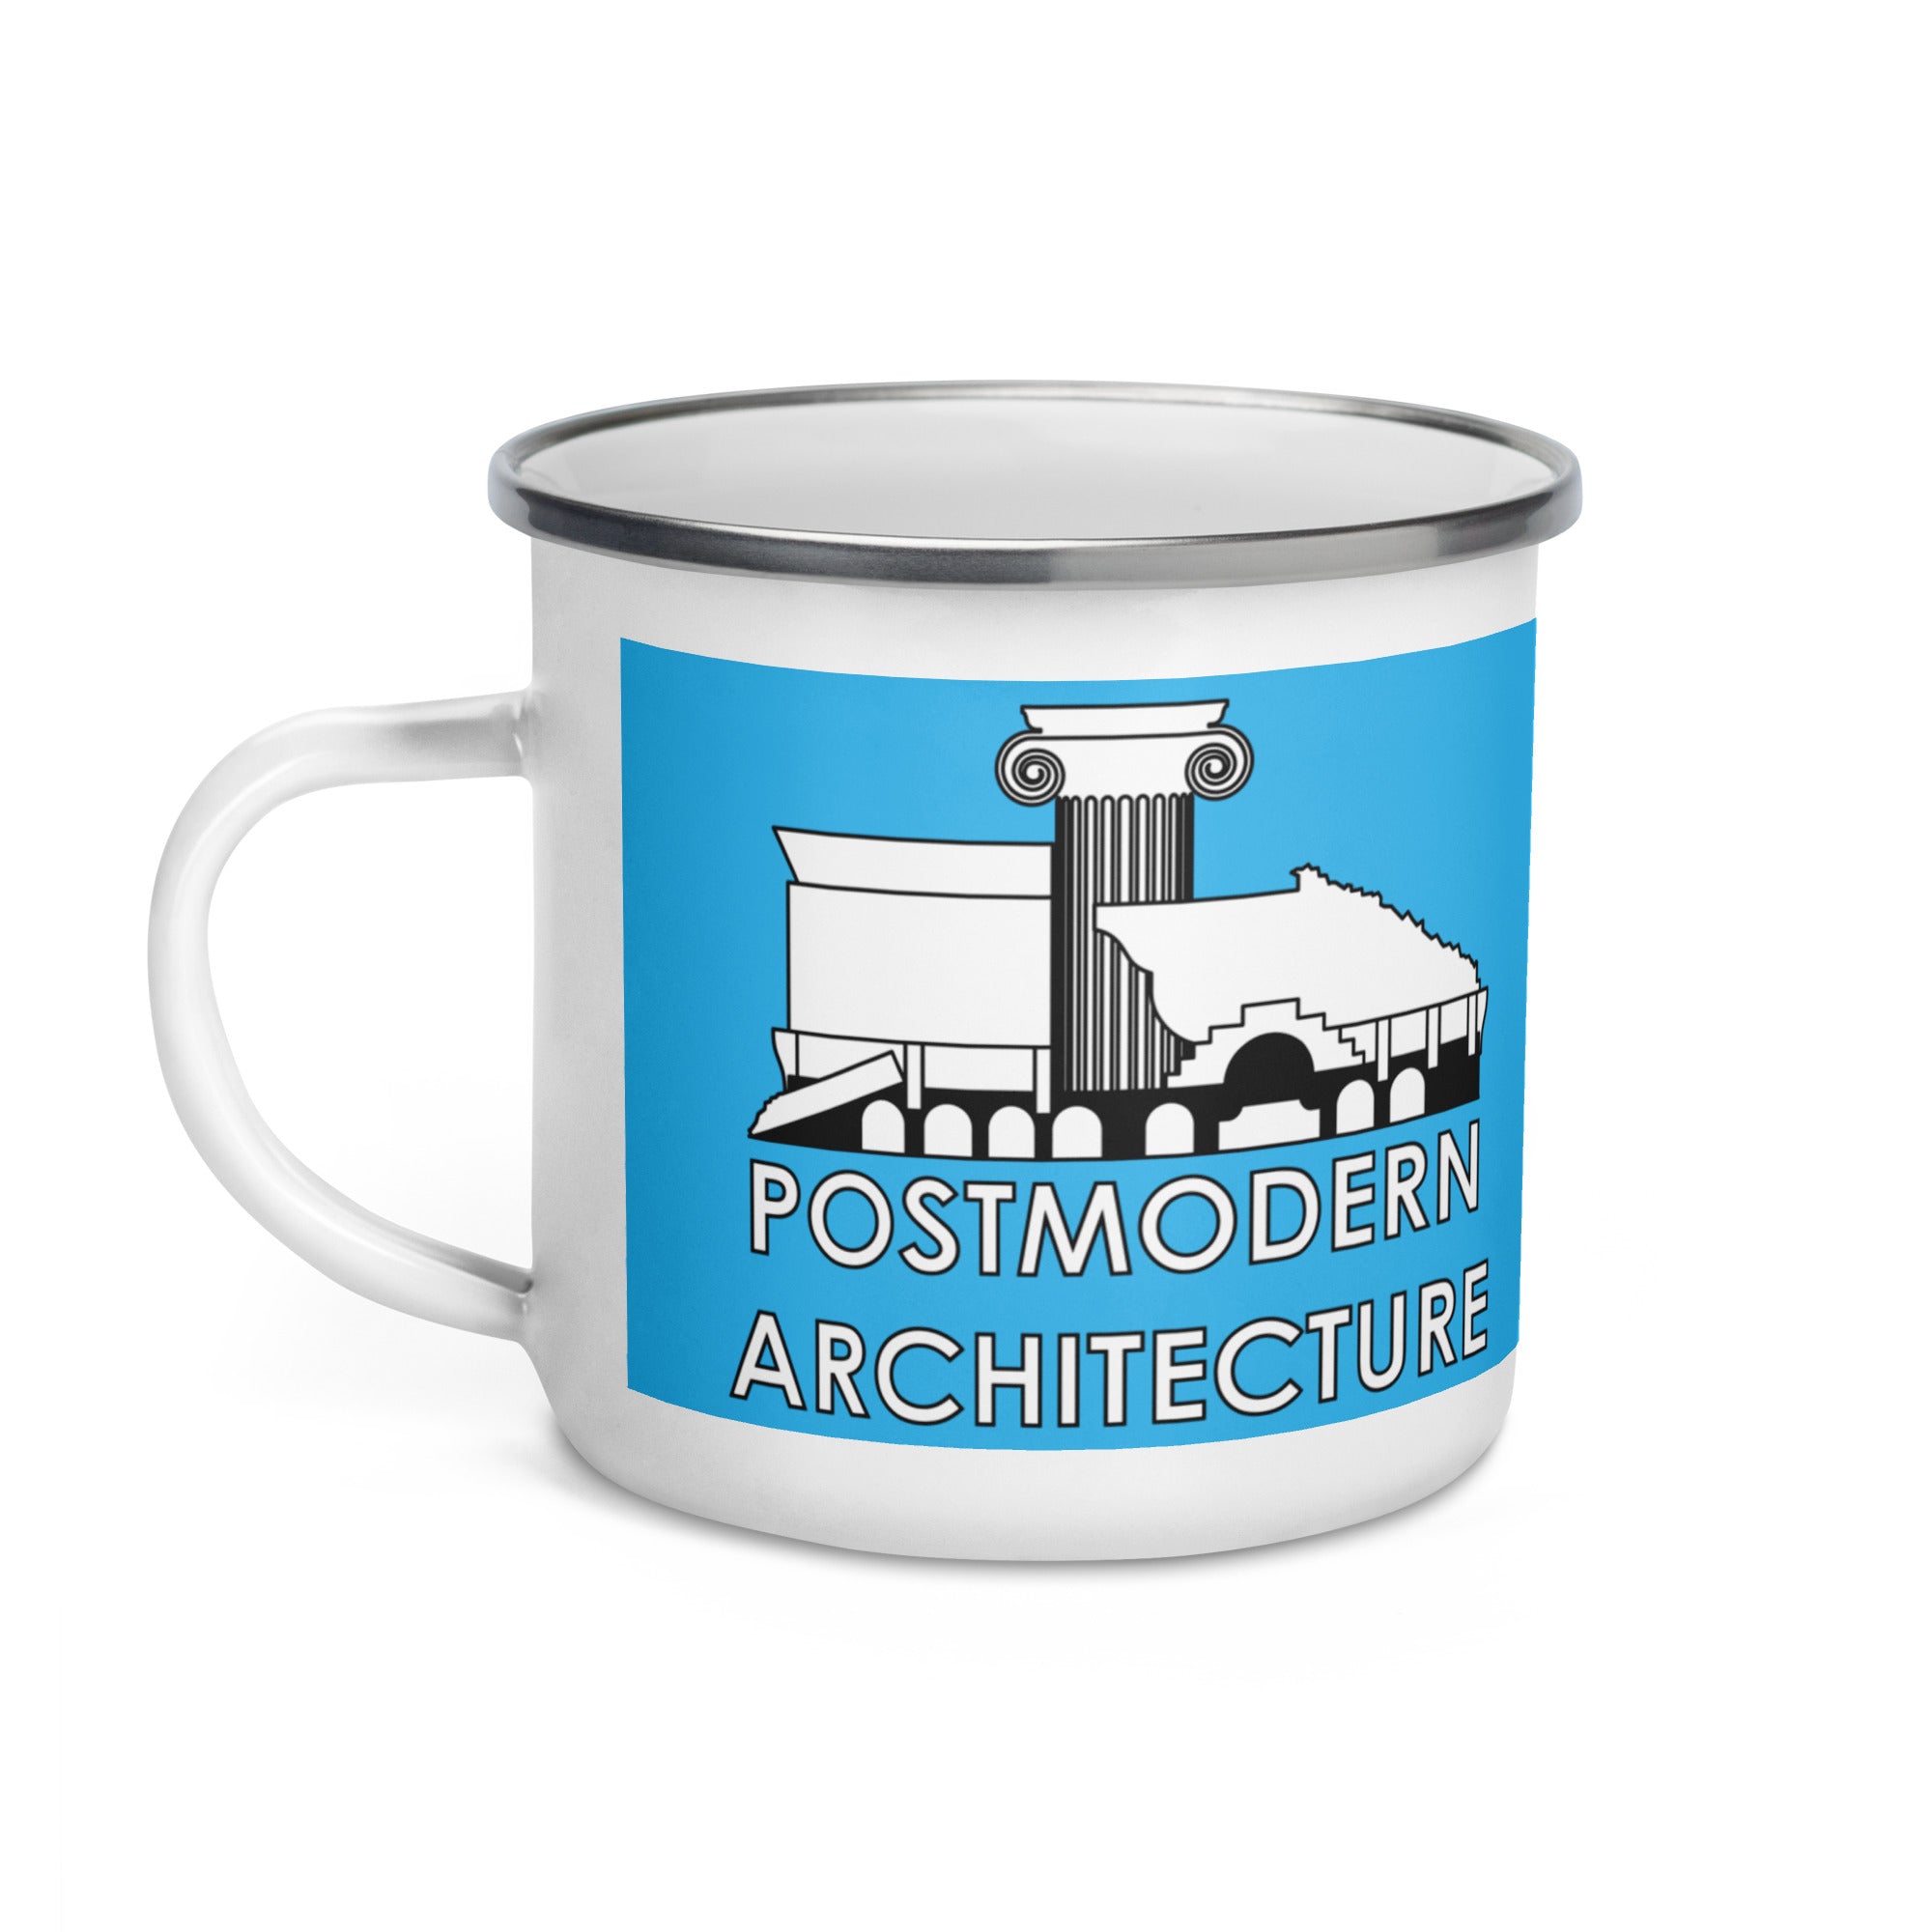 "Postmodern Architecture" Enamel Mug